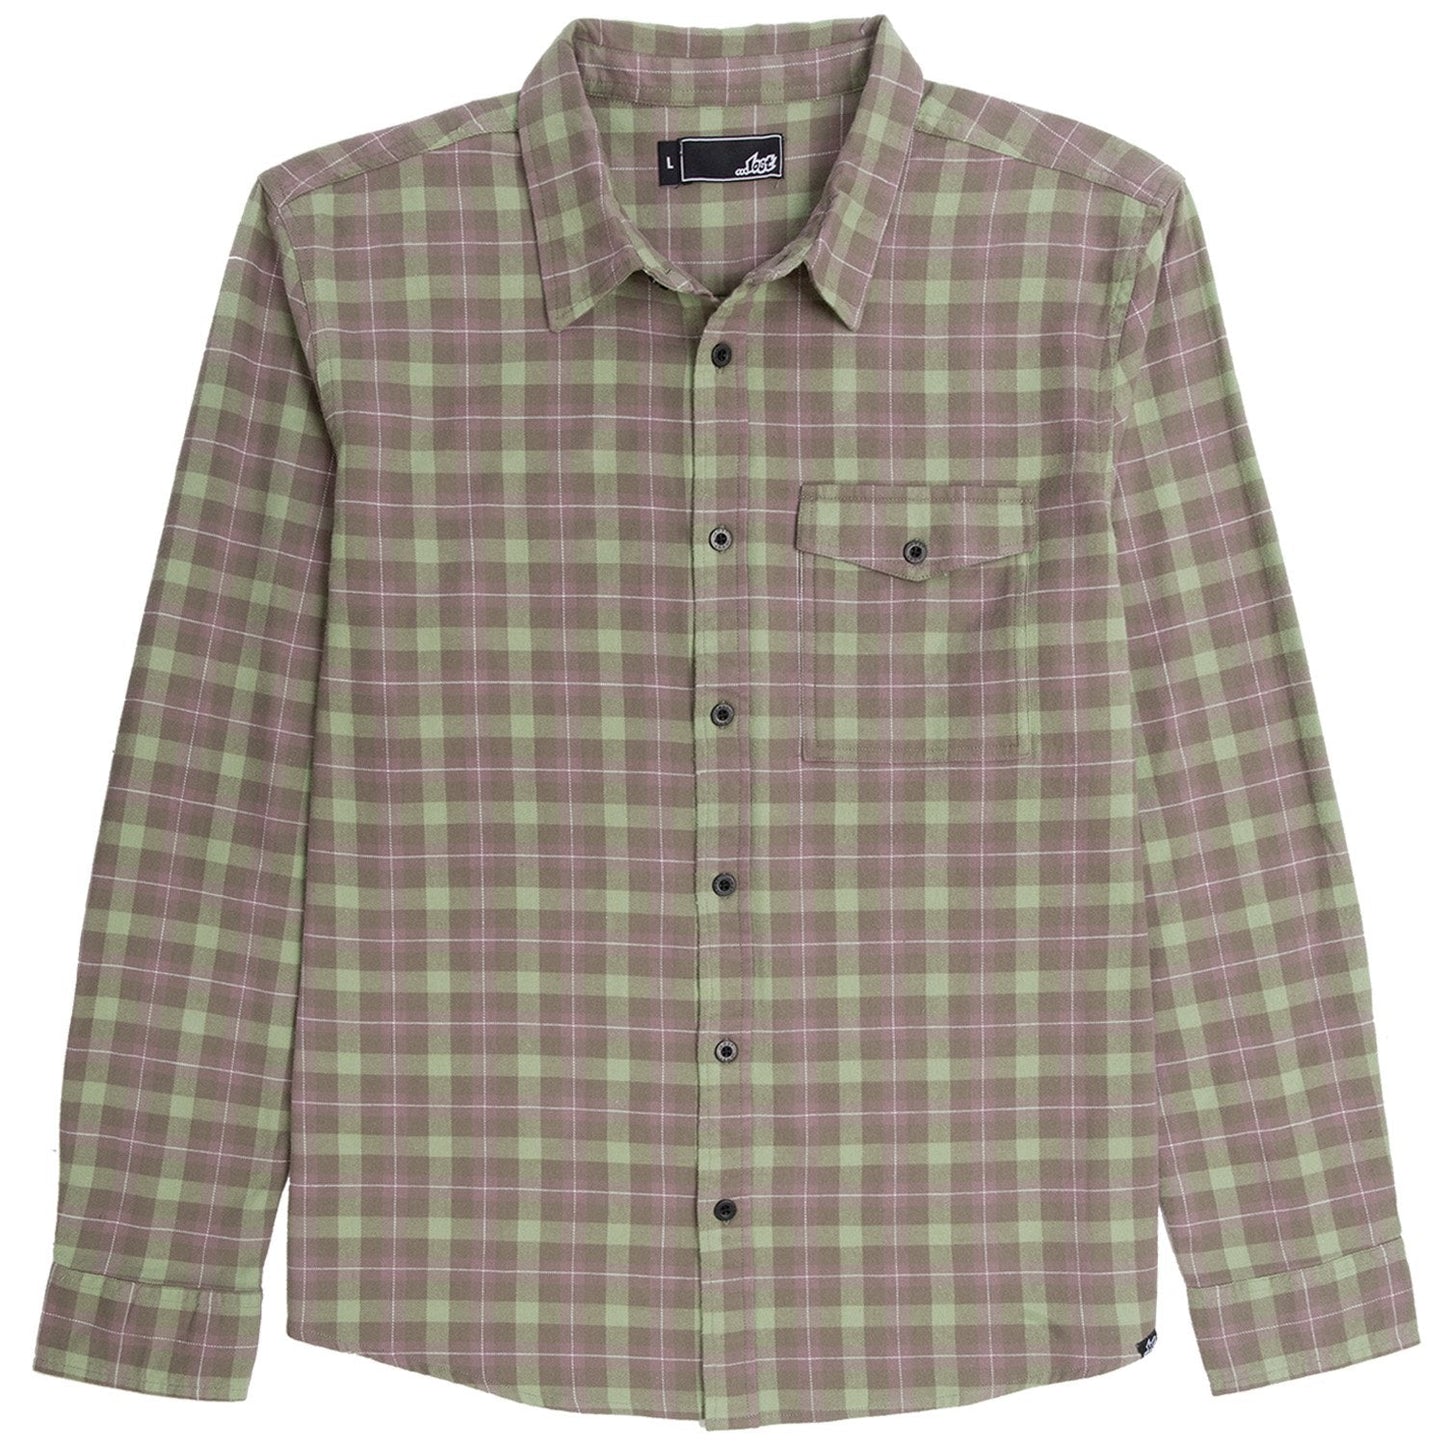 Lost enterprises junction flannel shirt - moss green